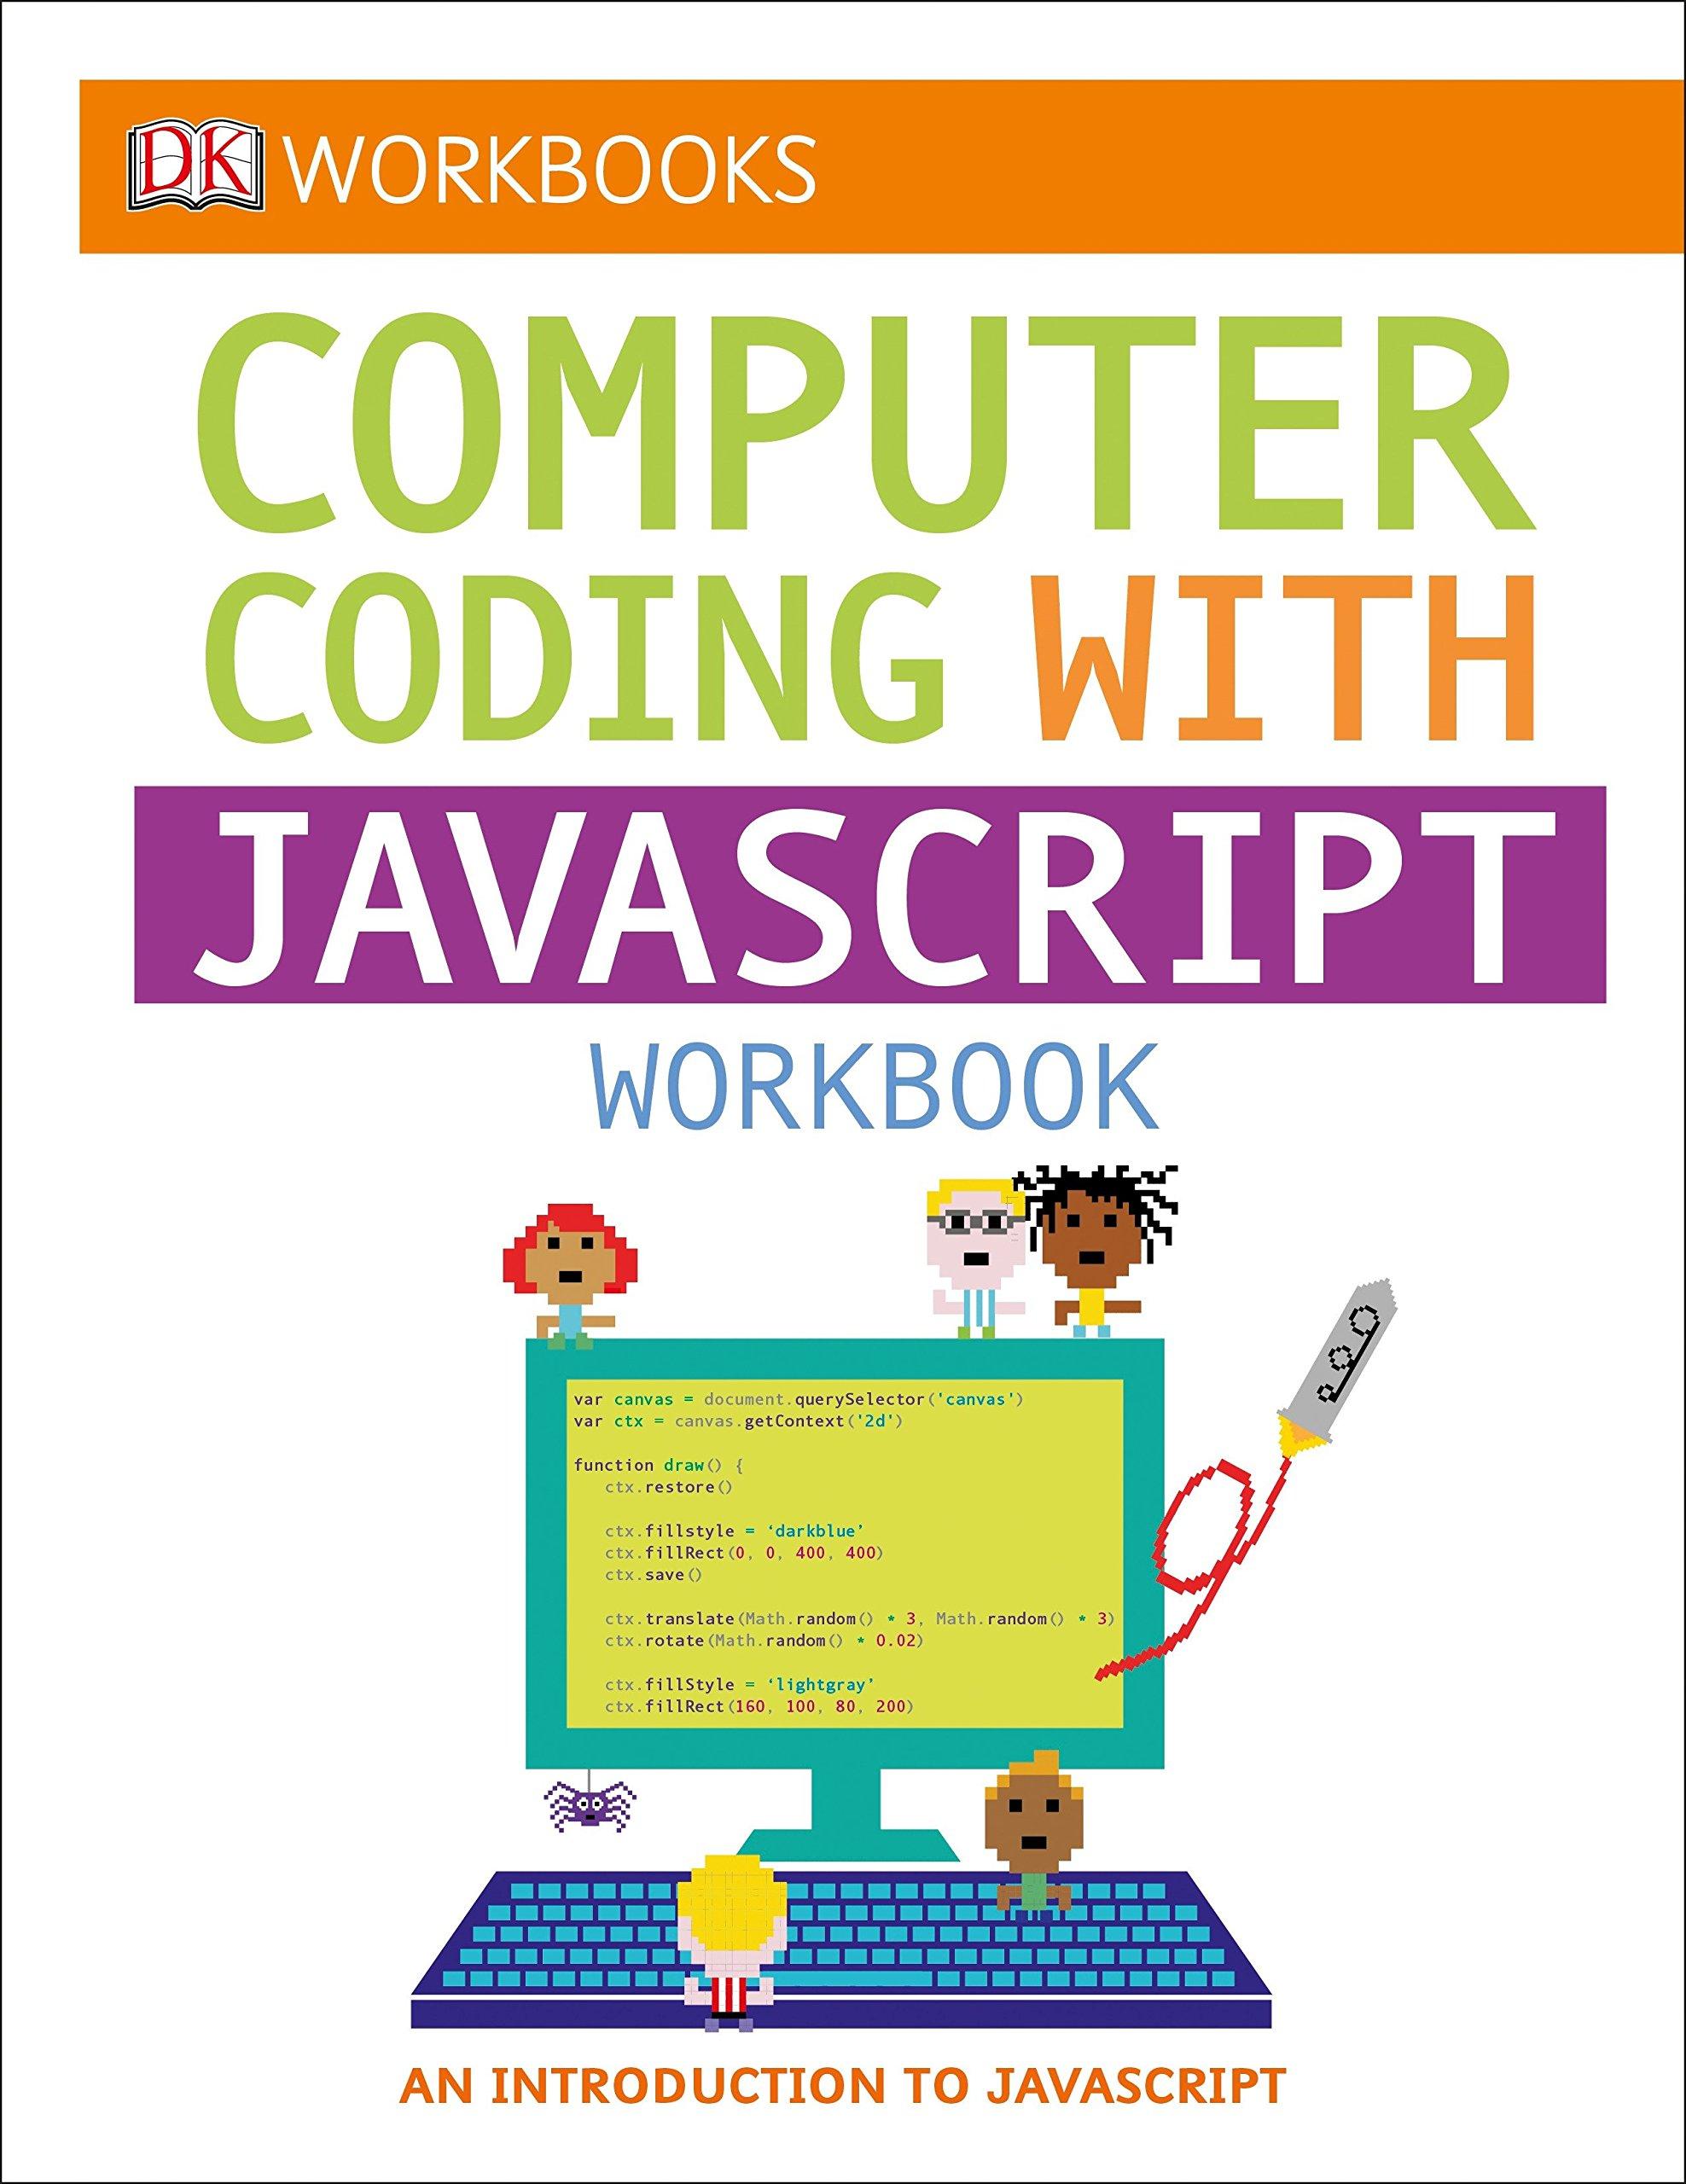 dk workbooks computer coding with javascript workbook 1st edition dk 1465469370, 978-1465469373